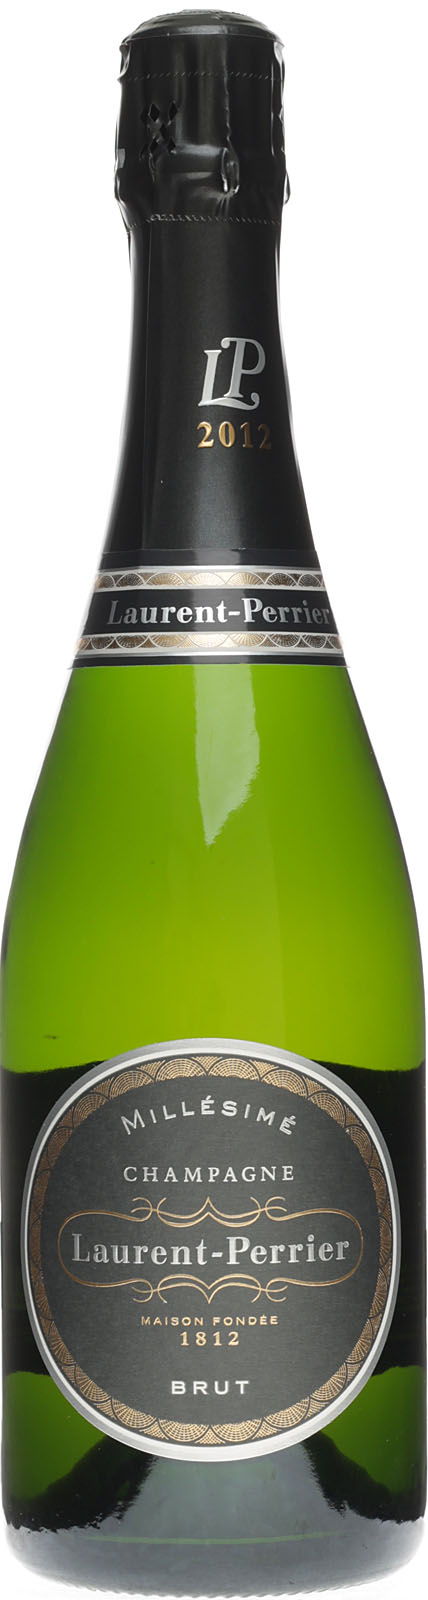 Laurent Perrier Champagner Brut Millesime 2012 bei uns